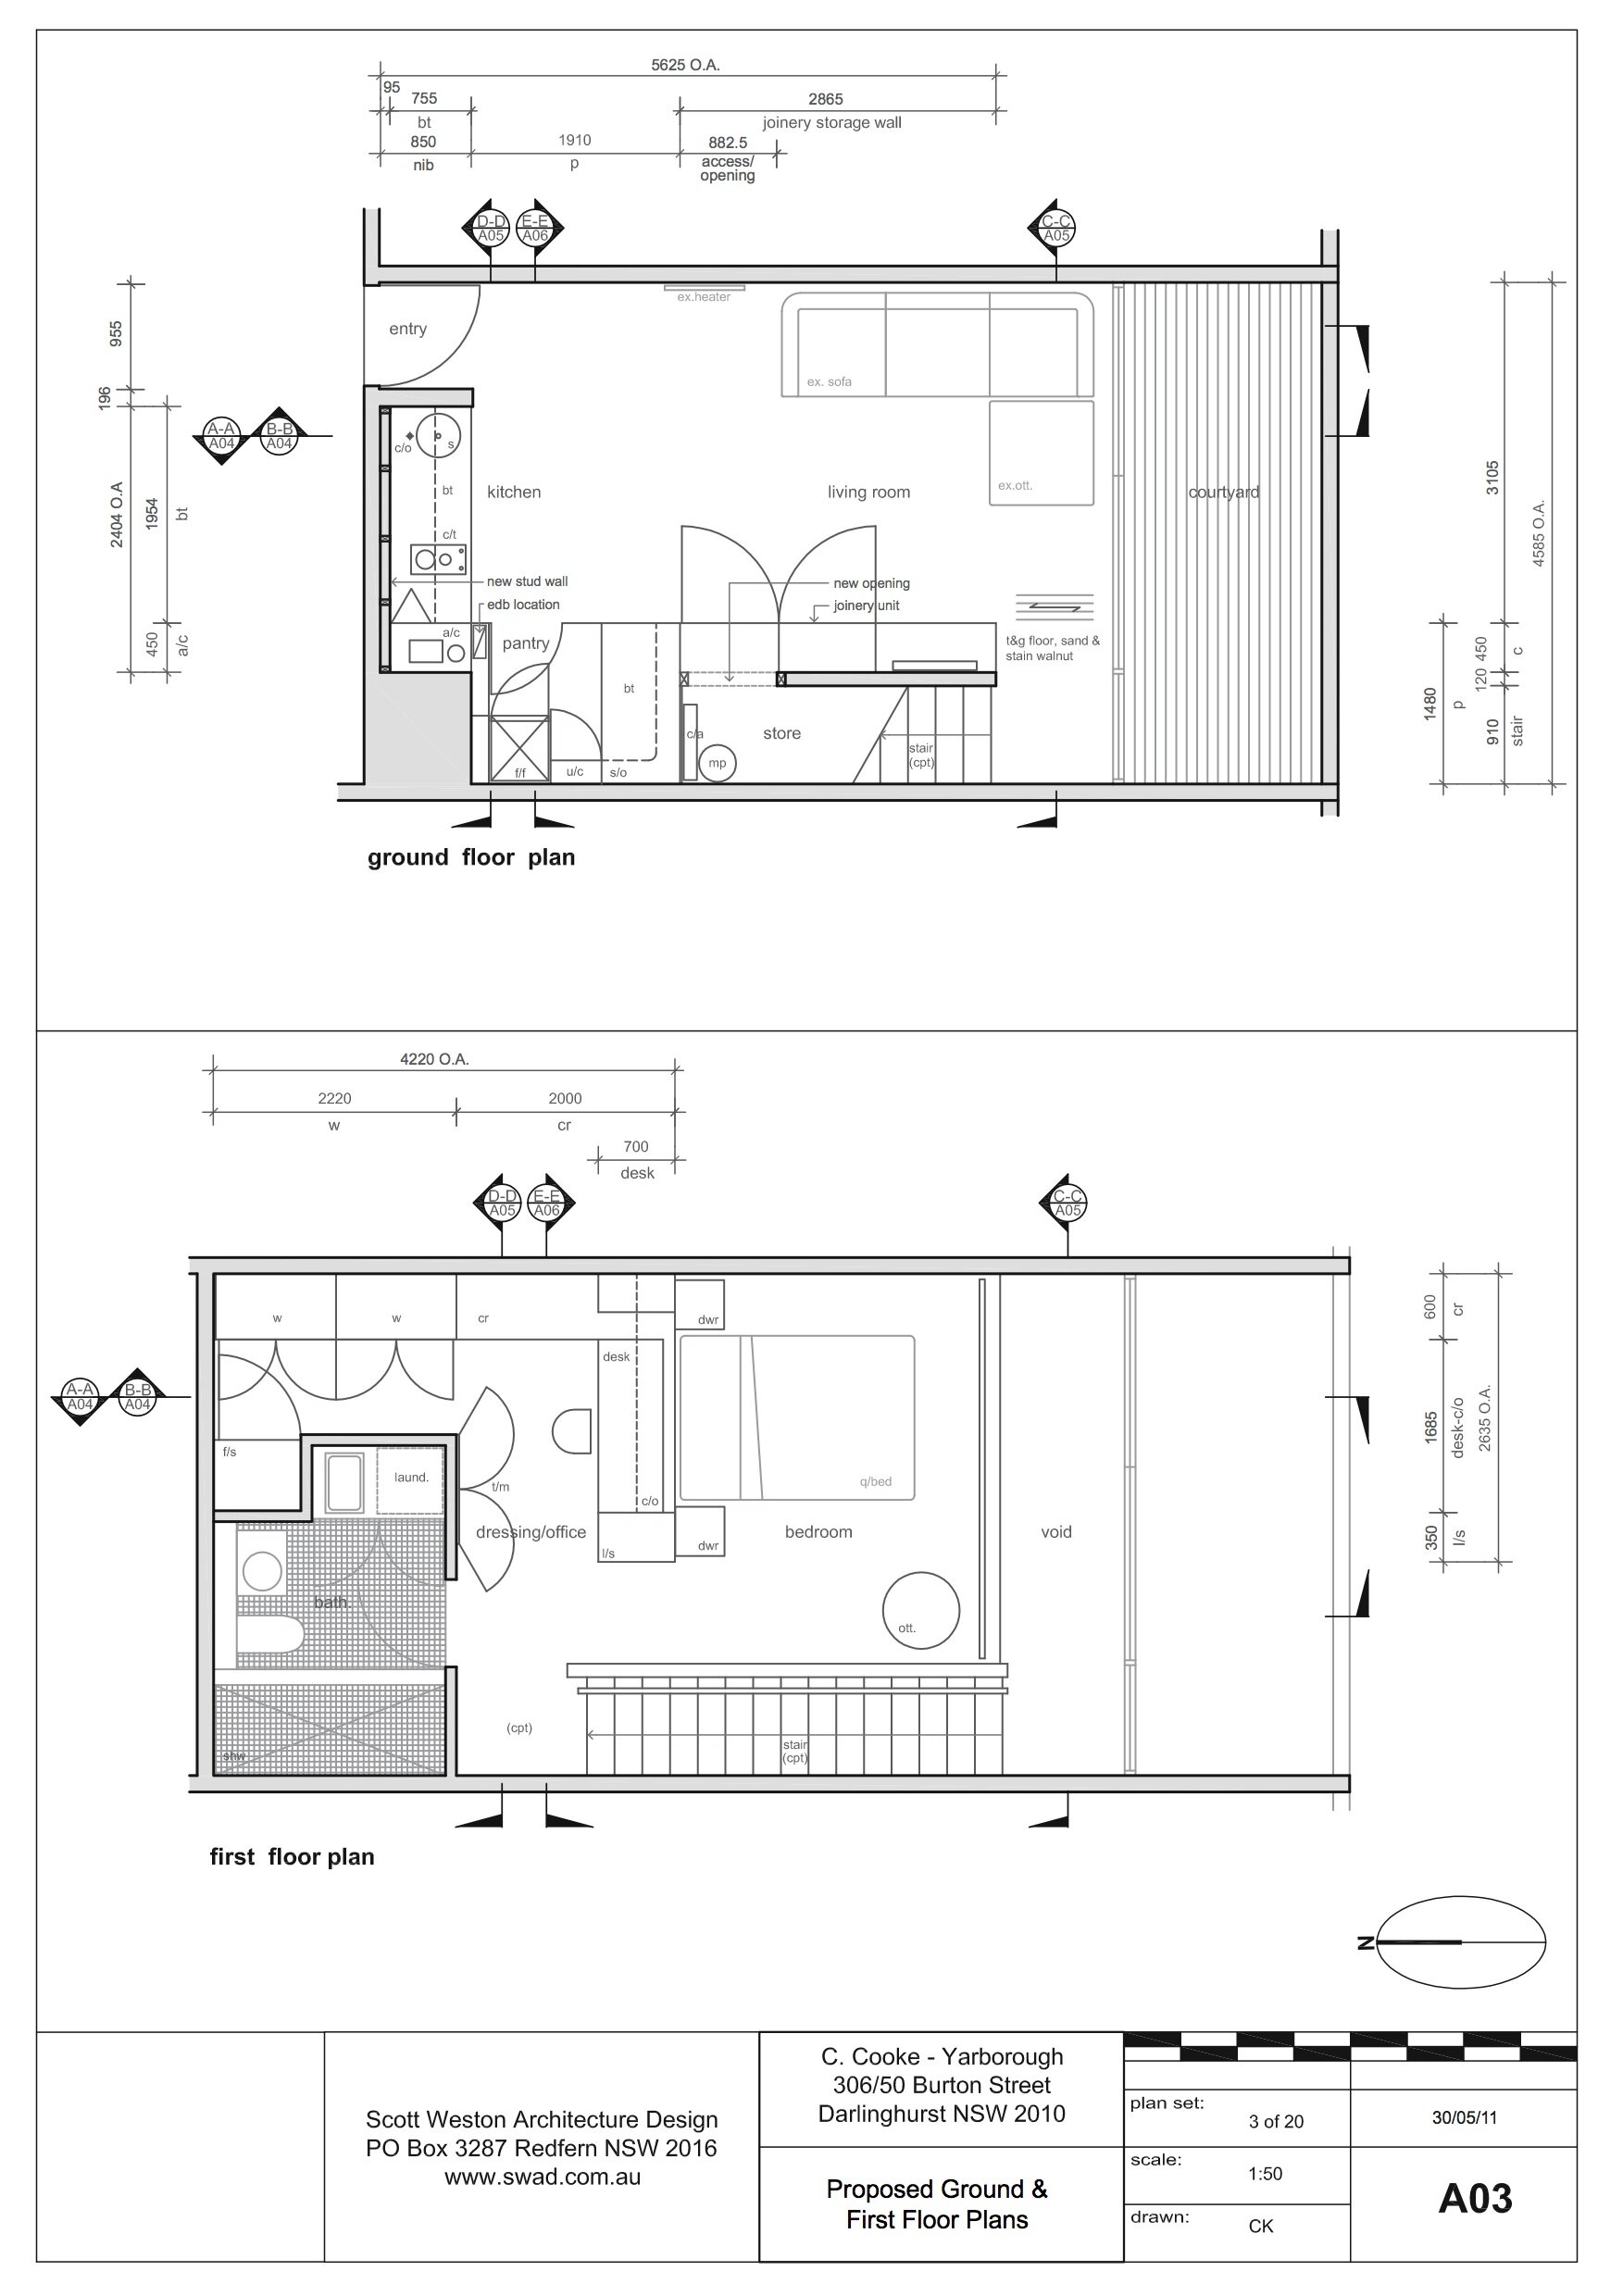 A03 Ground Floor and First Floor Plans.jpg